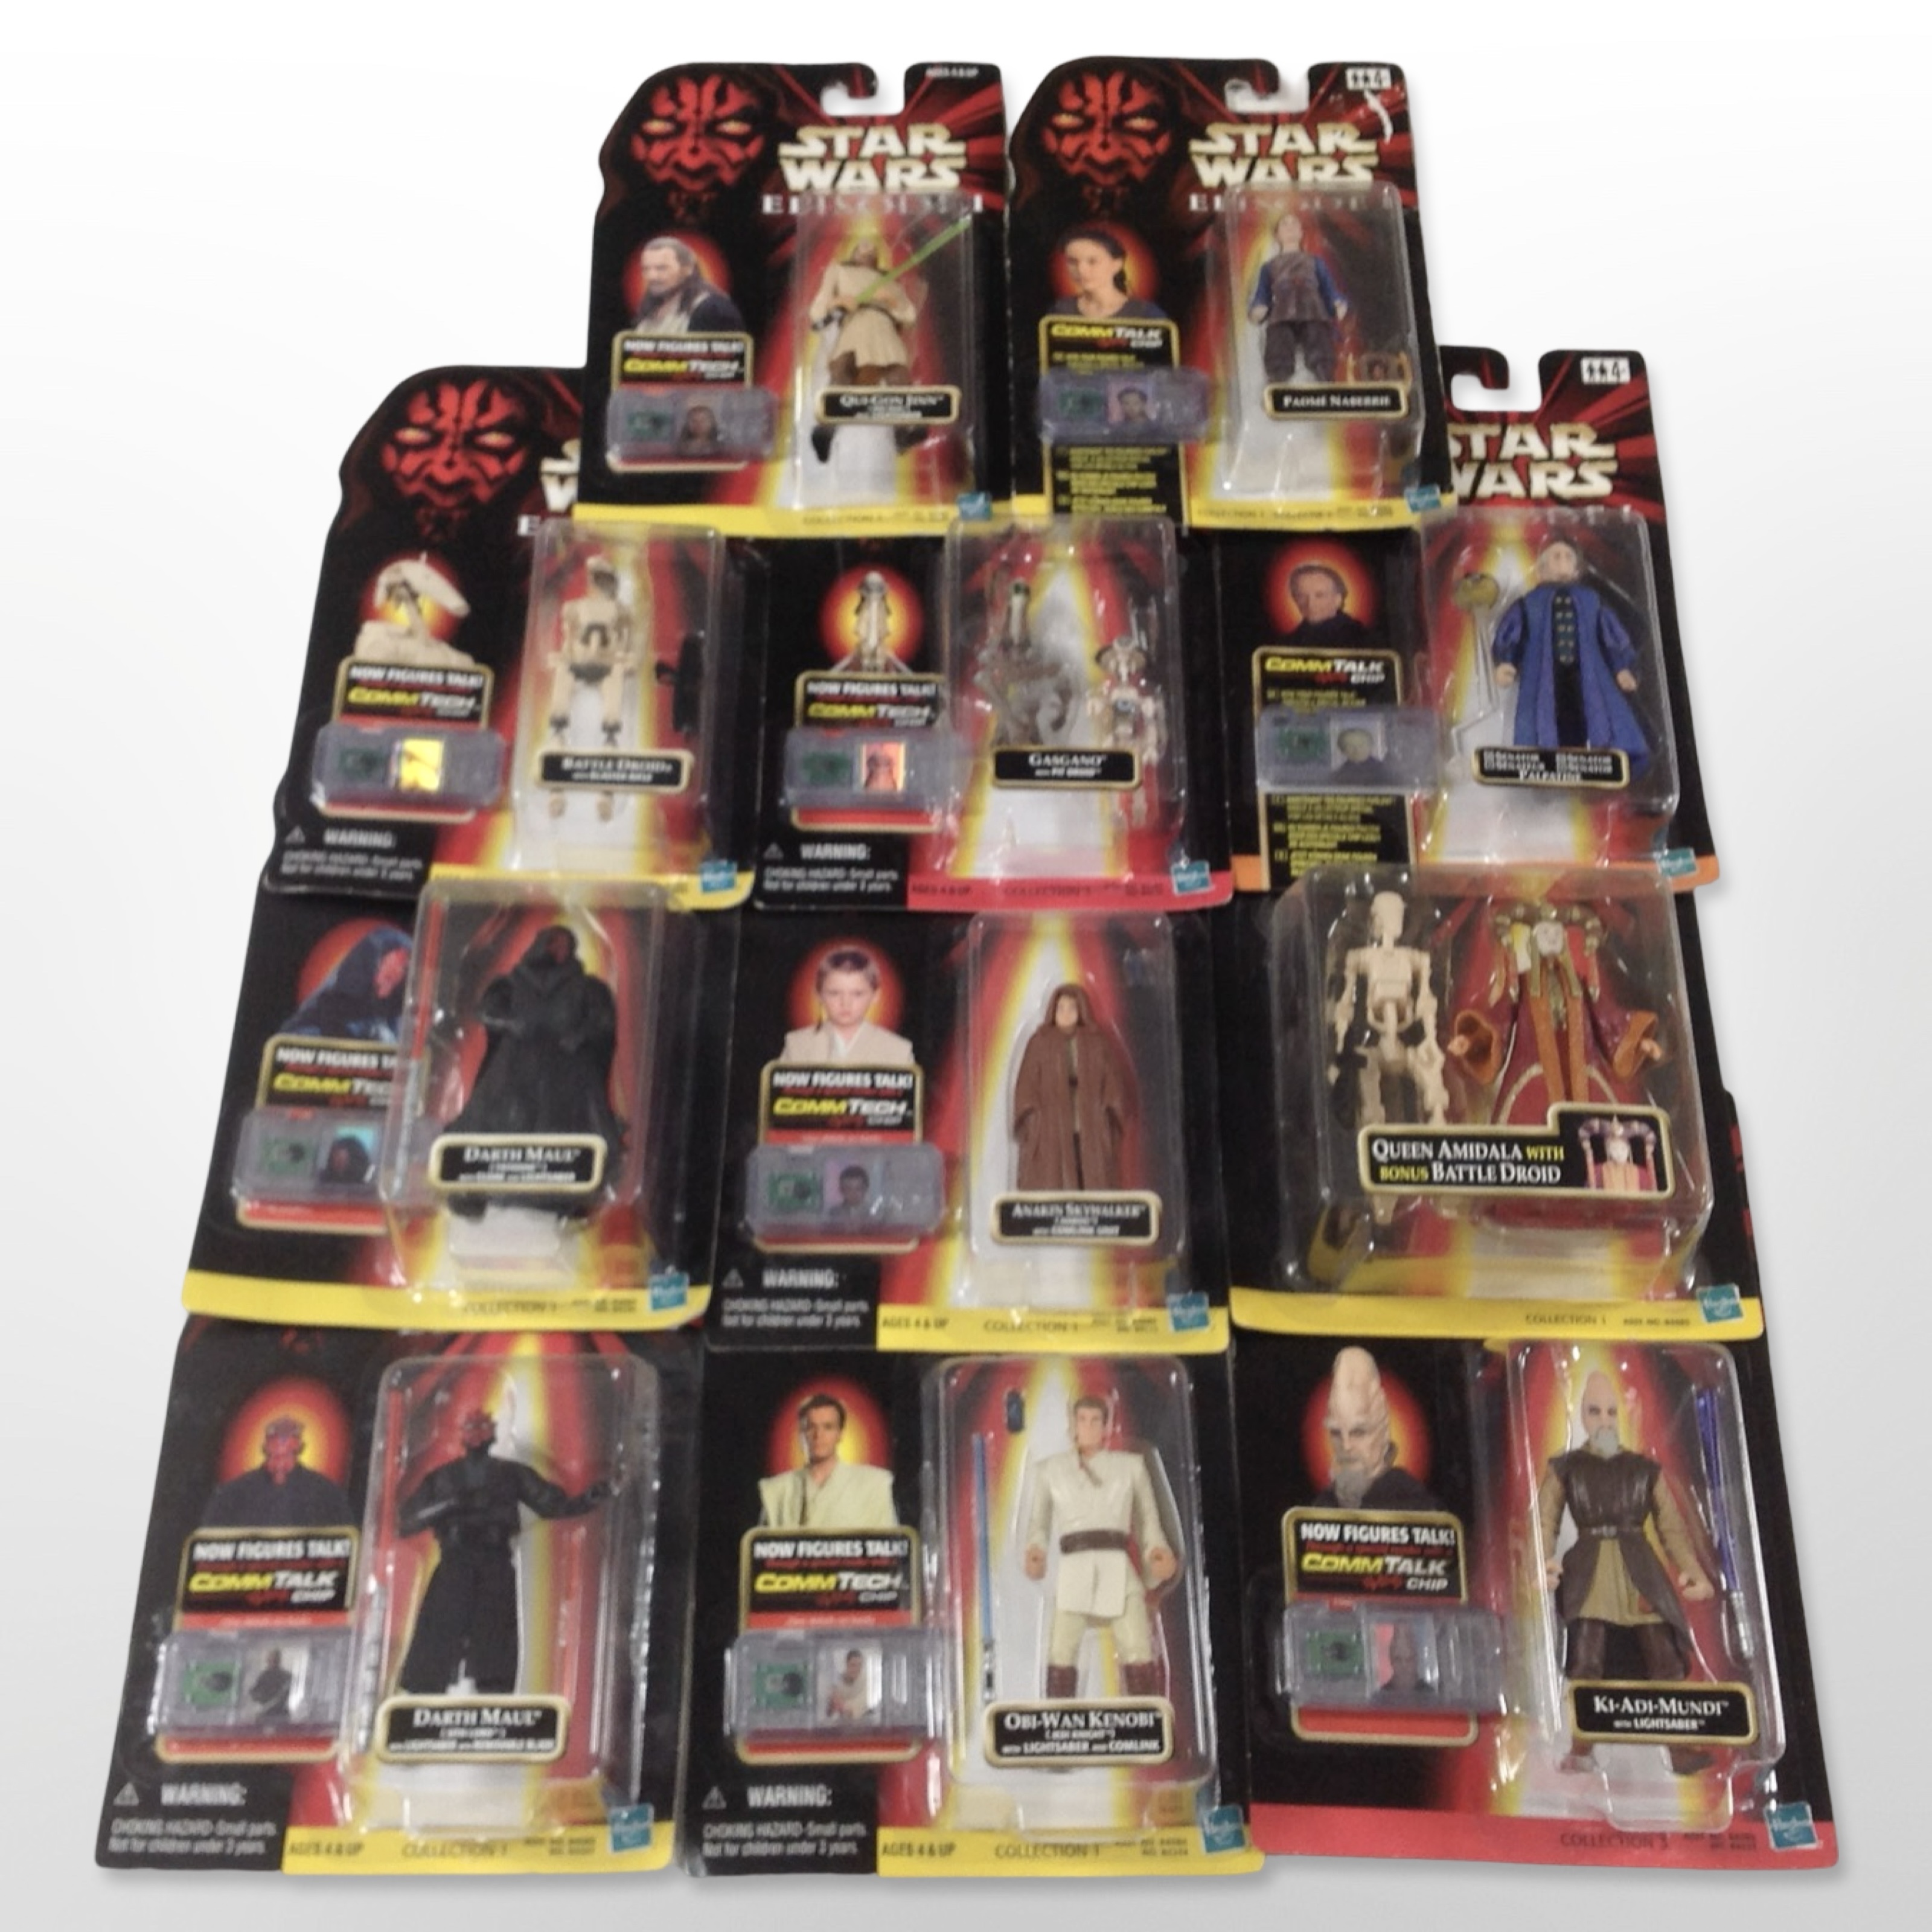 11 Hasbro Star Wars Episode I figurines, boxed.